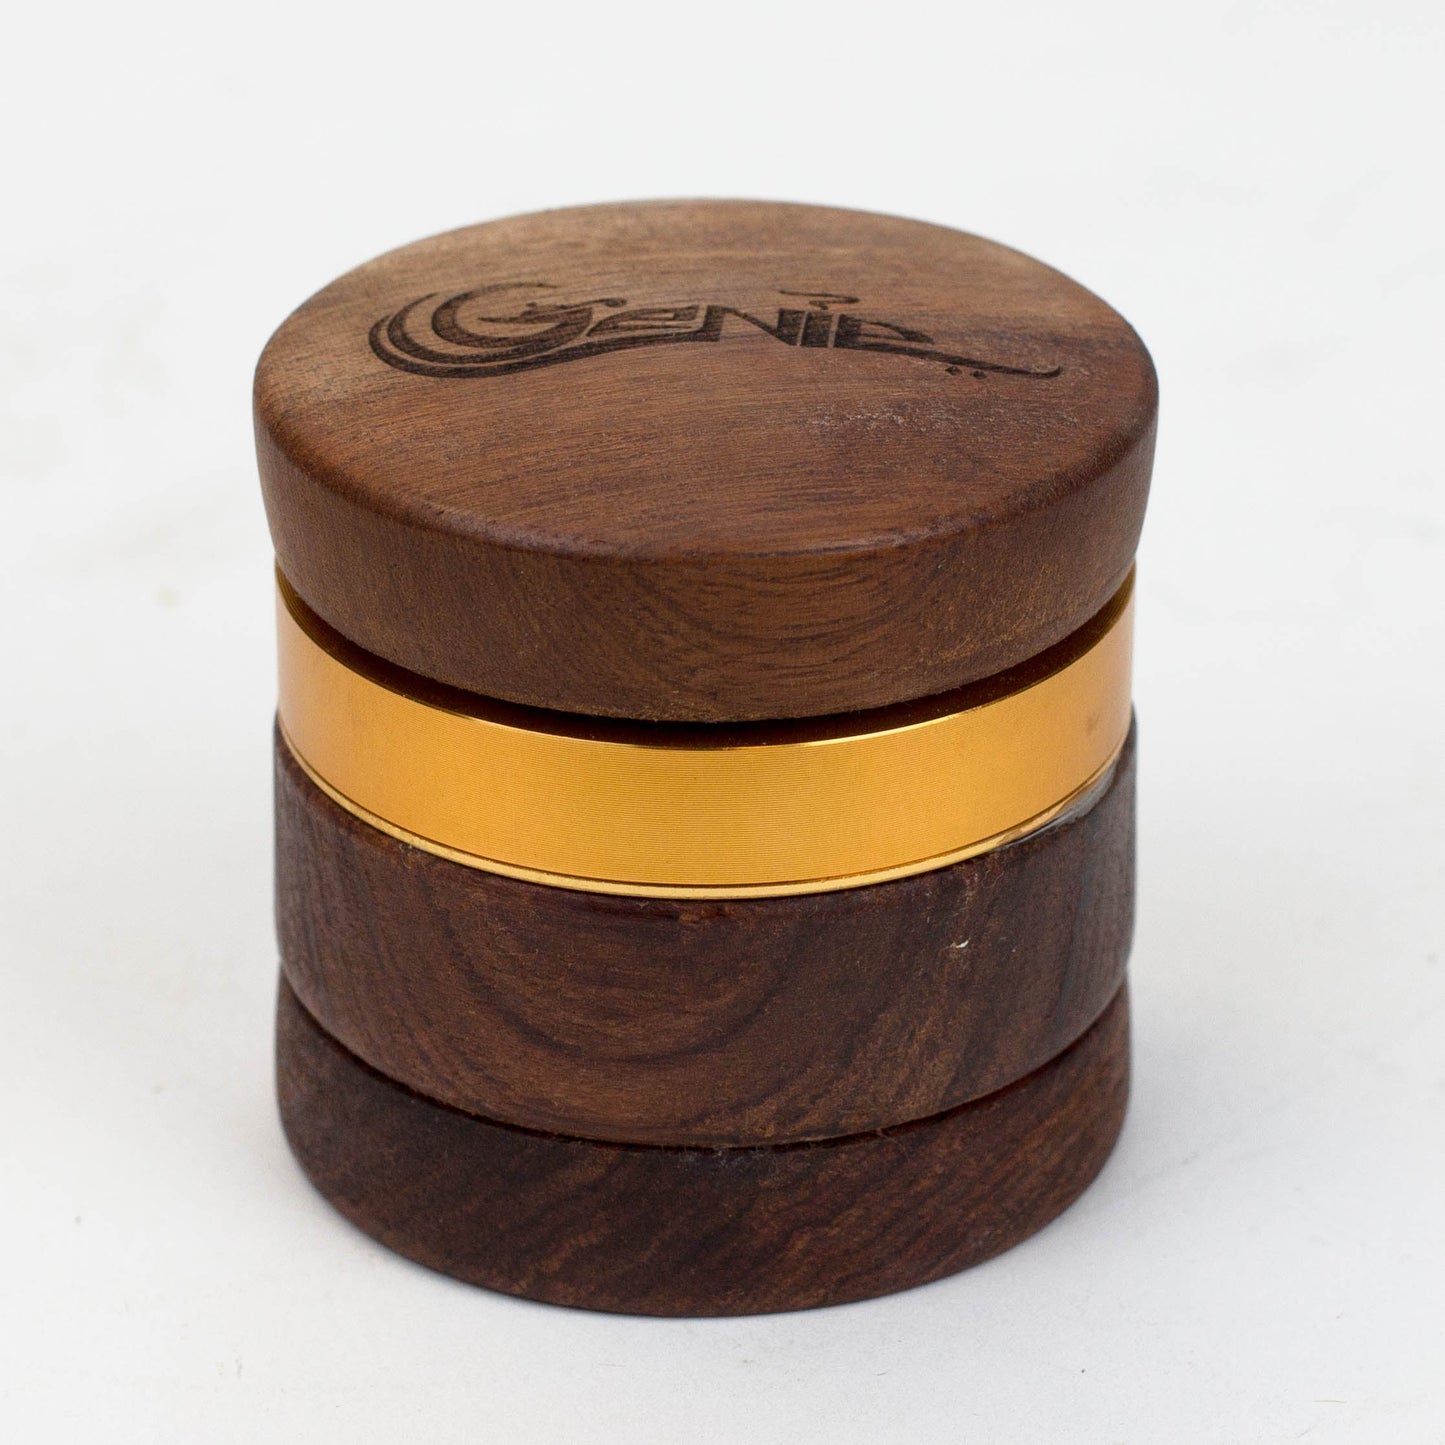 Genie 4 parts wooden cover grinder gift set Smoke Drop 